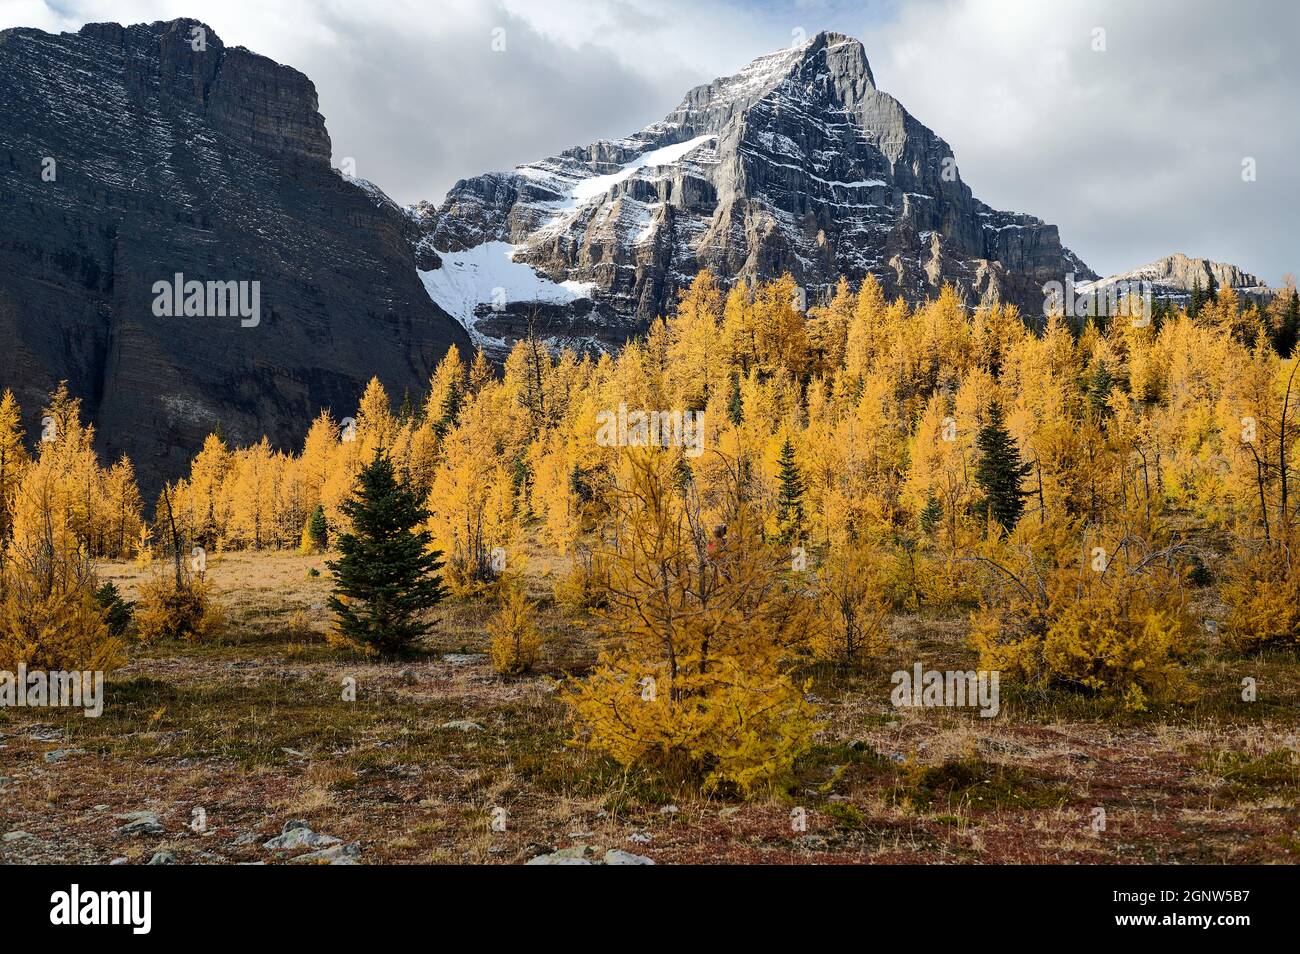 Larch trees (Larix decidua) with Sheol Mountain (L) and Haddo Peak (R) behind, Saddle Mountain Trail, Banff National Park, Alberta, Canada, Stock Photo